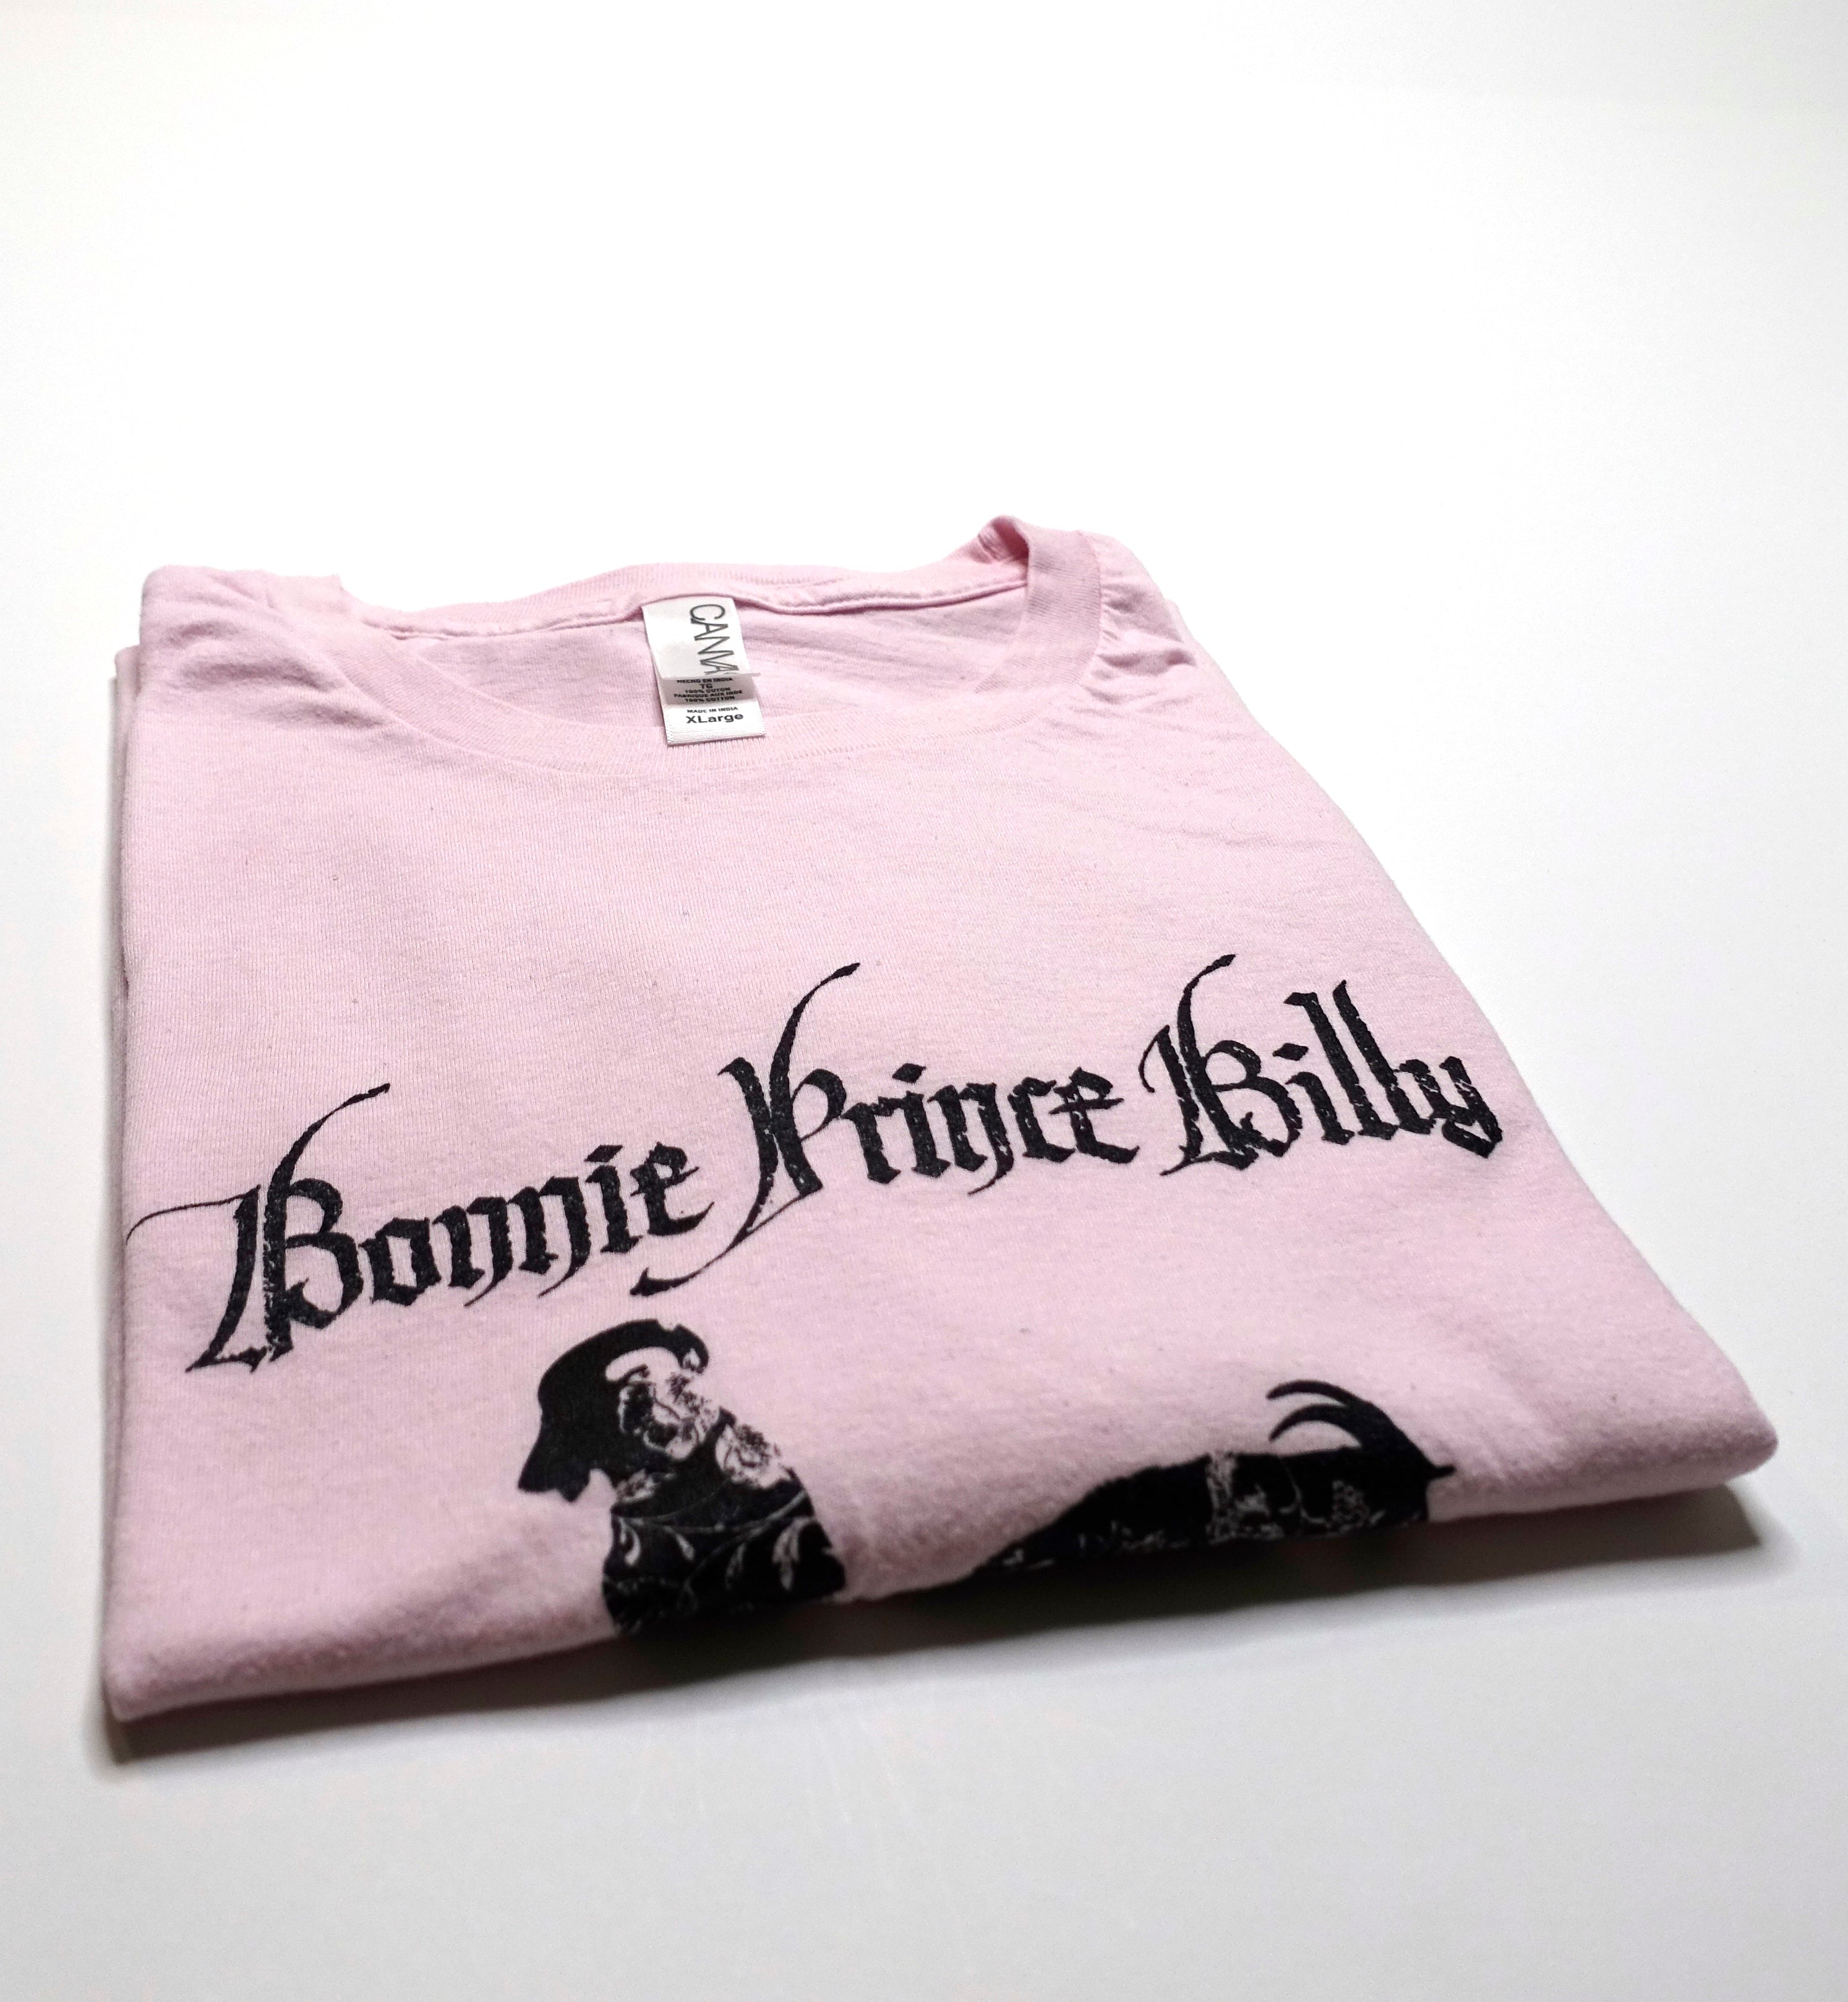 Bonnie "Prince" Billy - Goats Tour Shirt Size XL